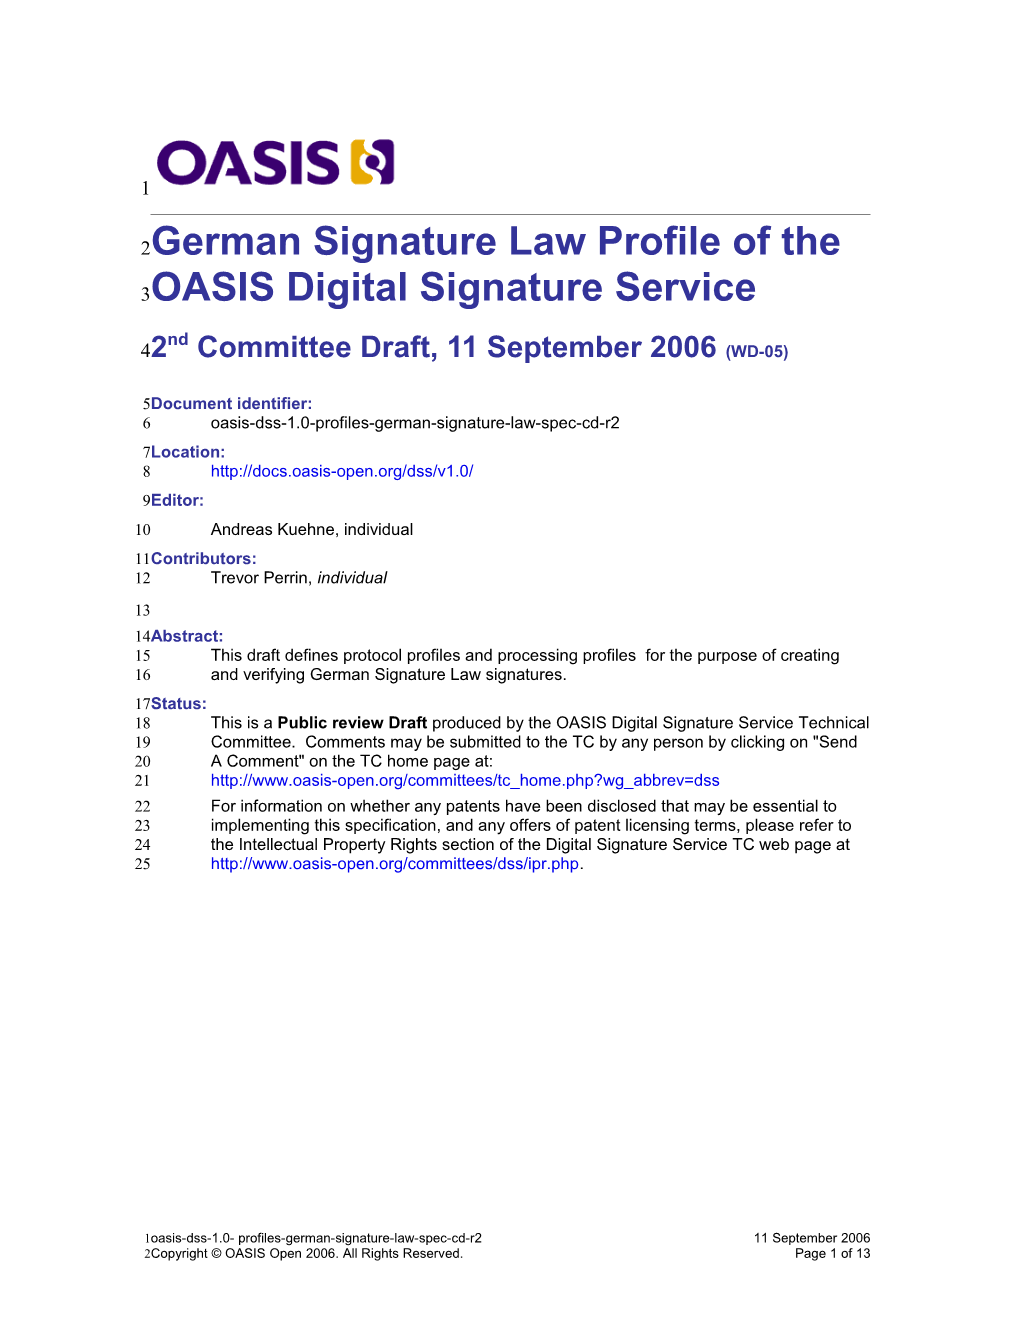 German Signature Law Profile of the OASIS Digital Signature Service